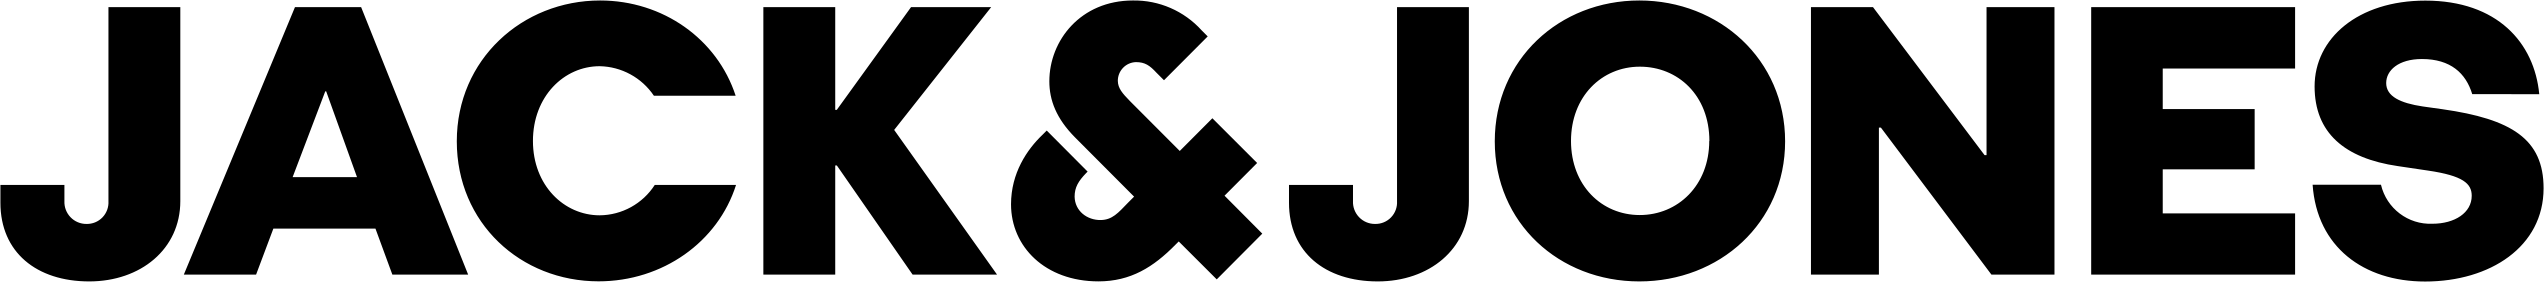 JACK & Jones logo example in black and white